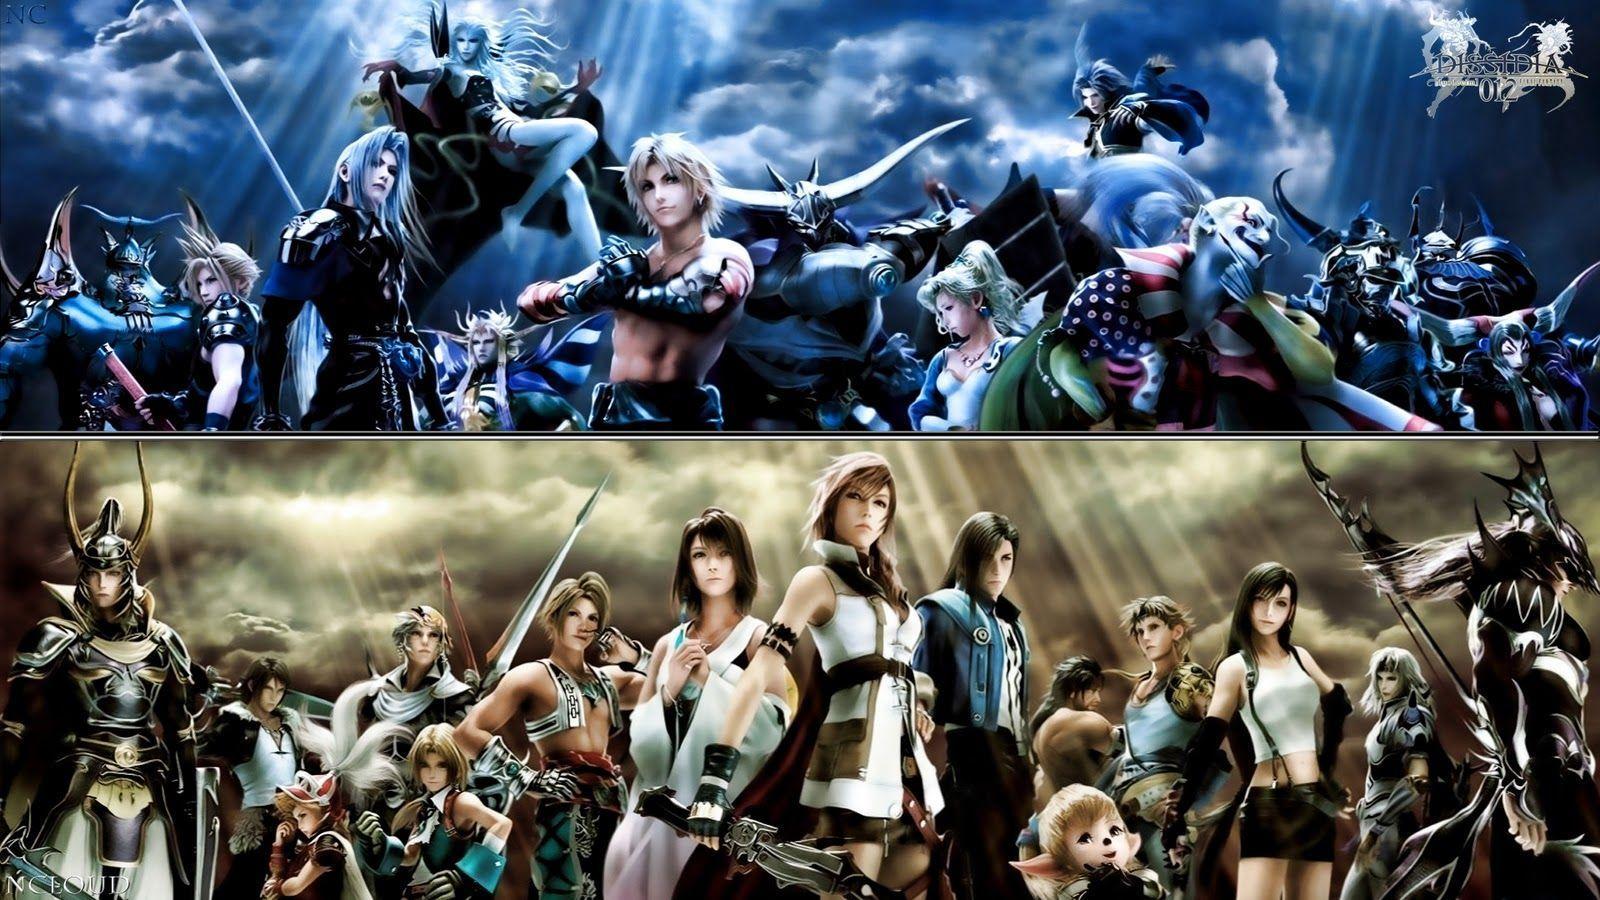 image For > Final Fantasy Dissidia Wallpaper Cloud